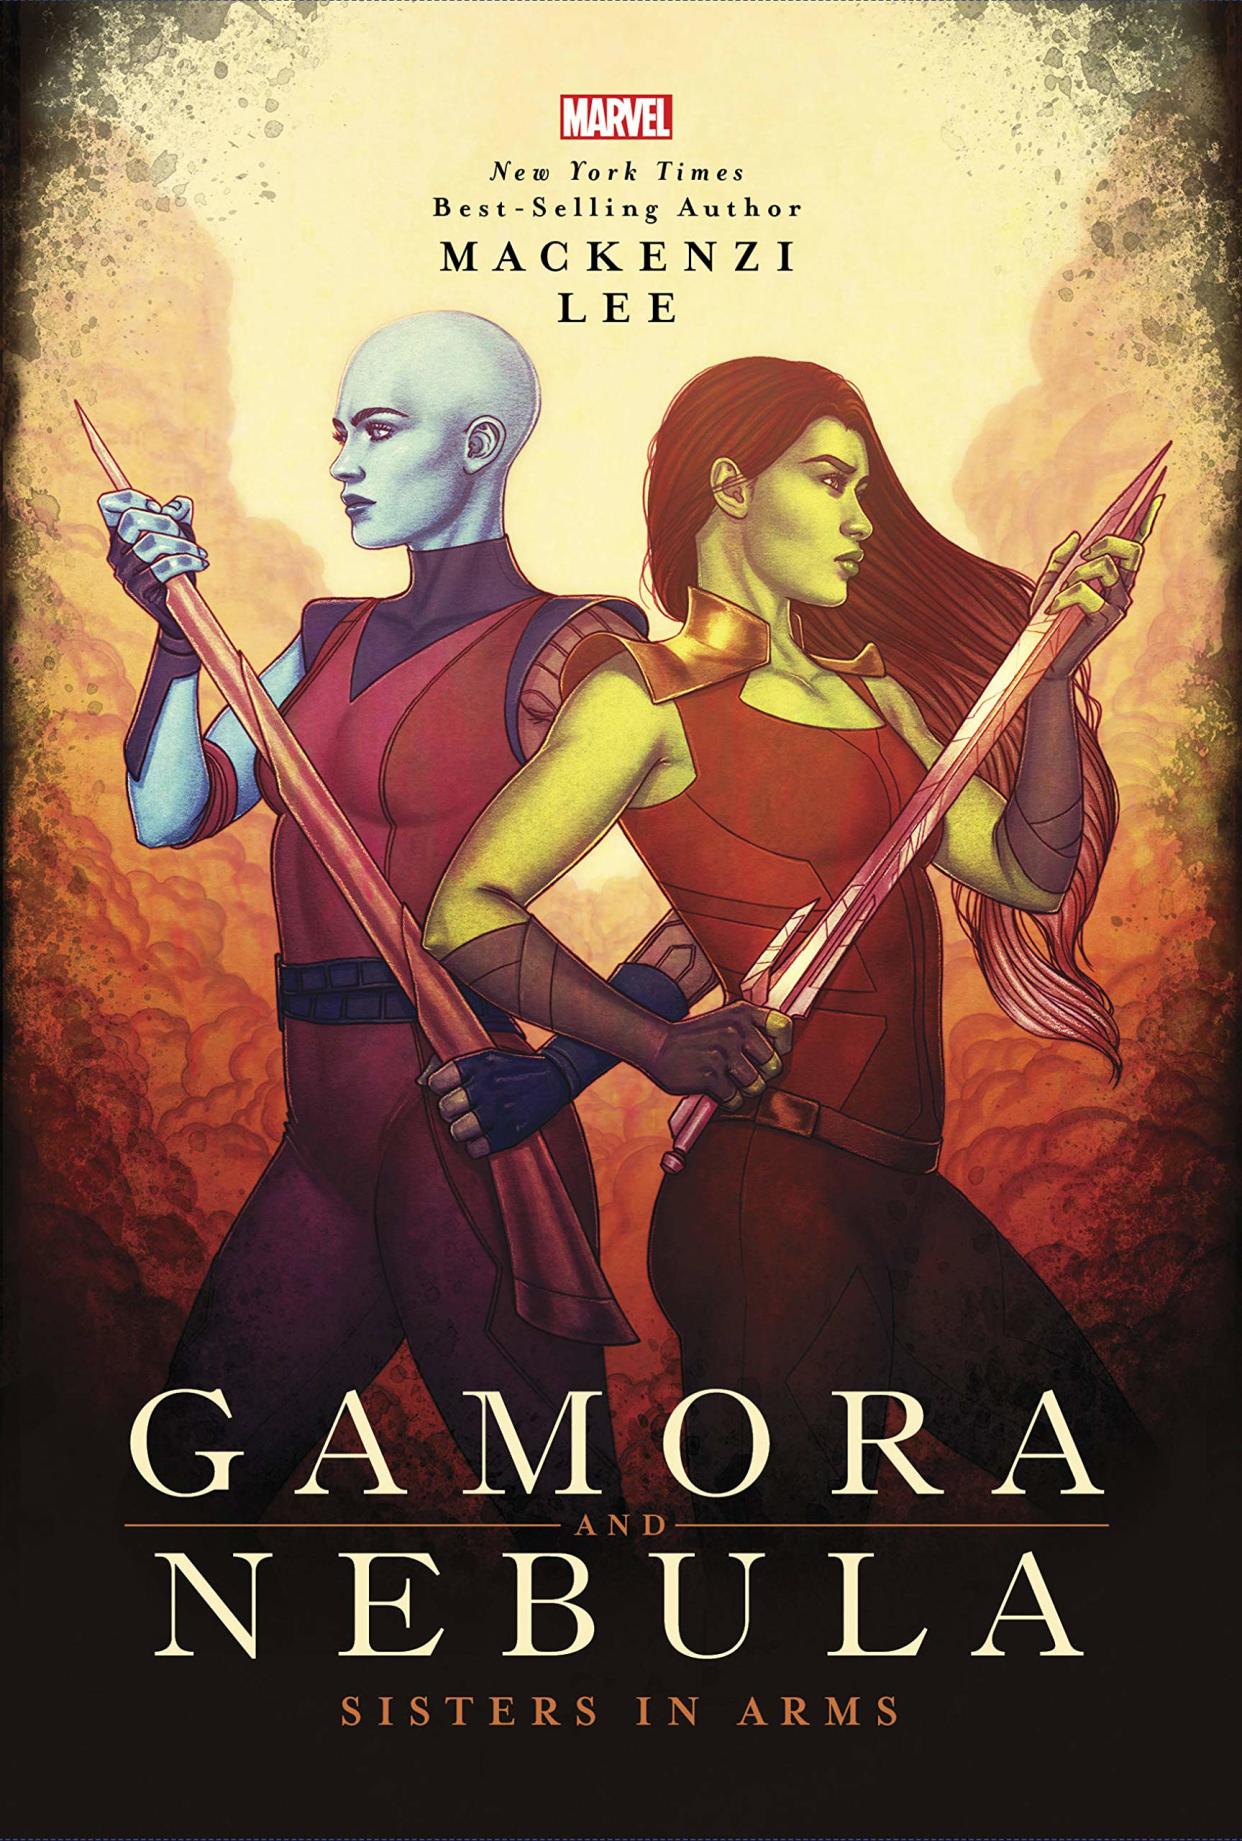 Gamora and Nebula star in the new Marvel novel 